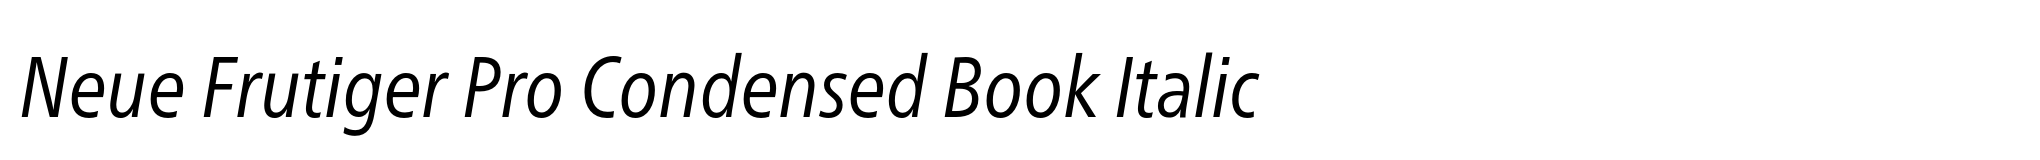 Neue Frutiger Pro Condensed Book Italic image